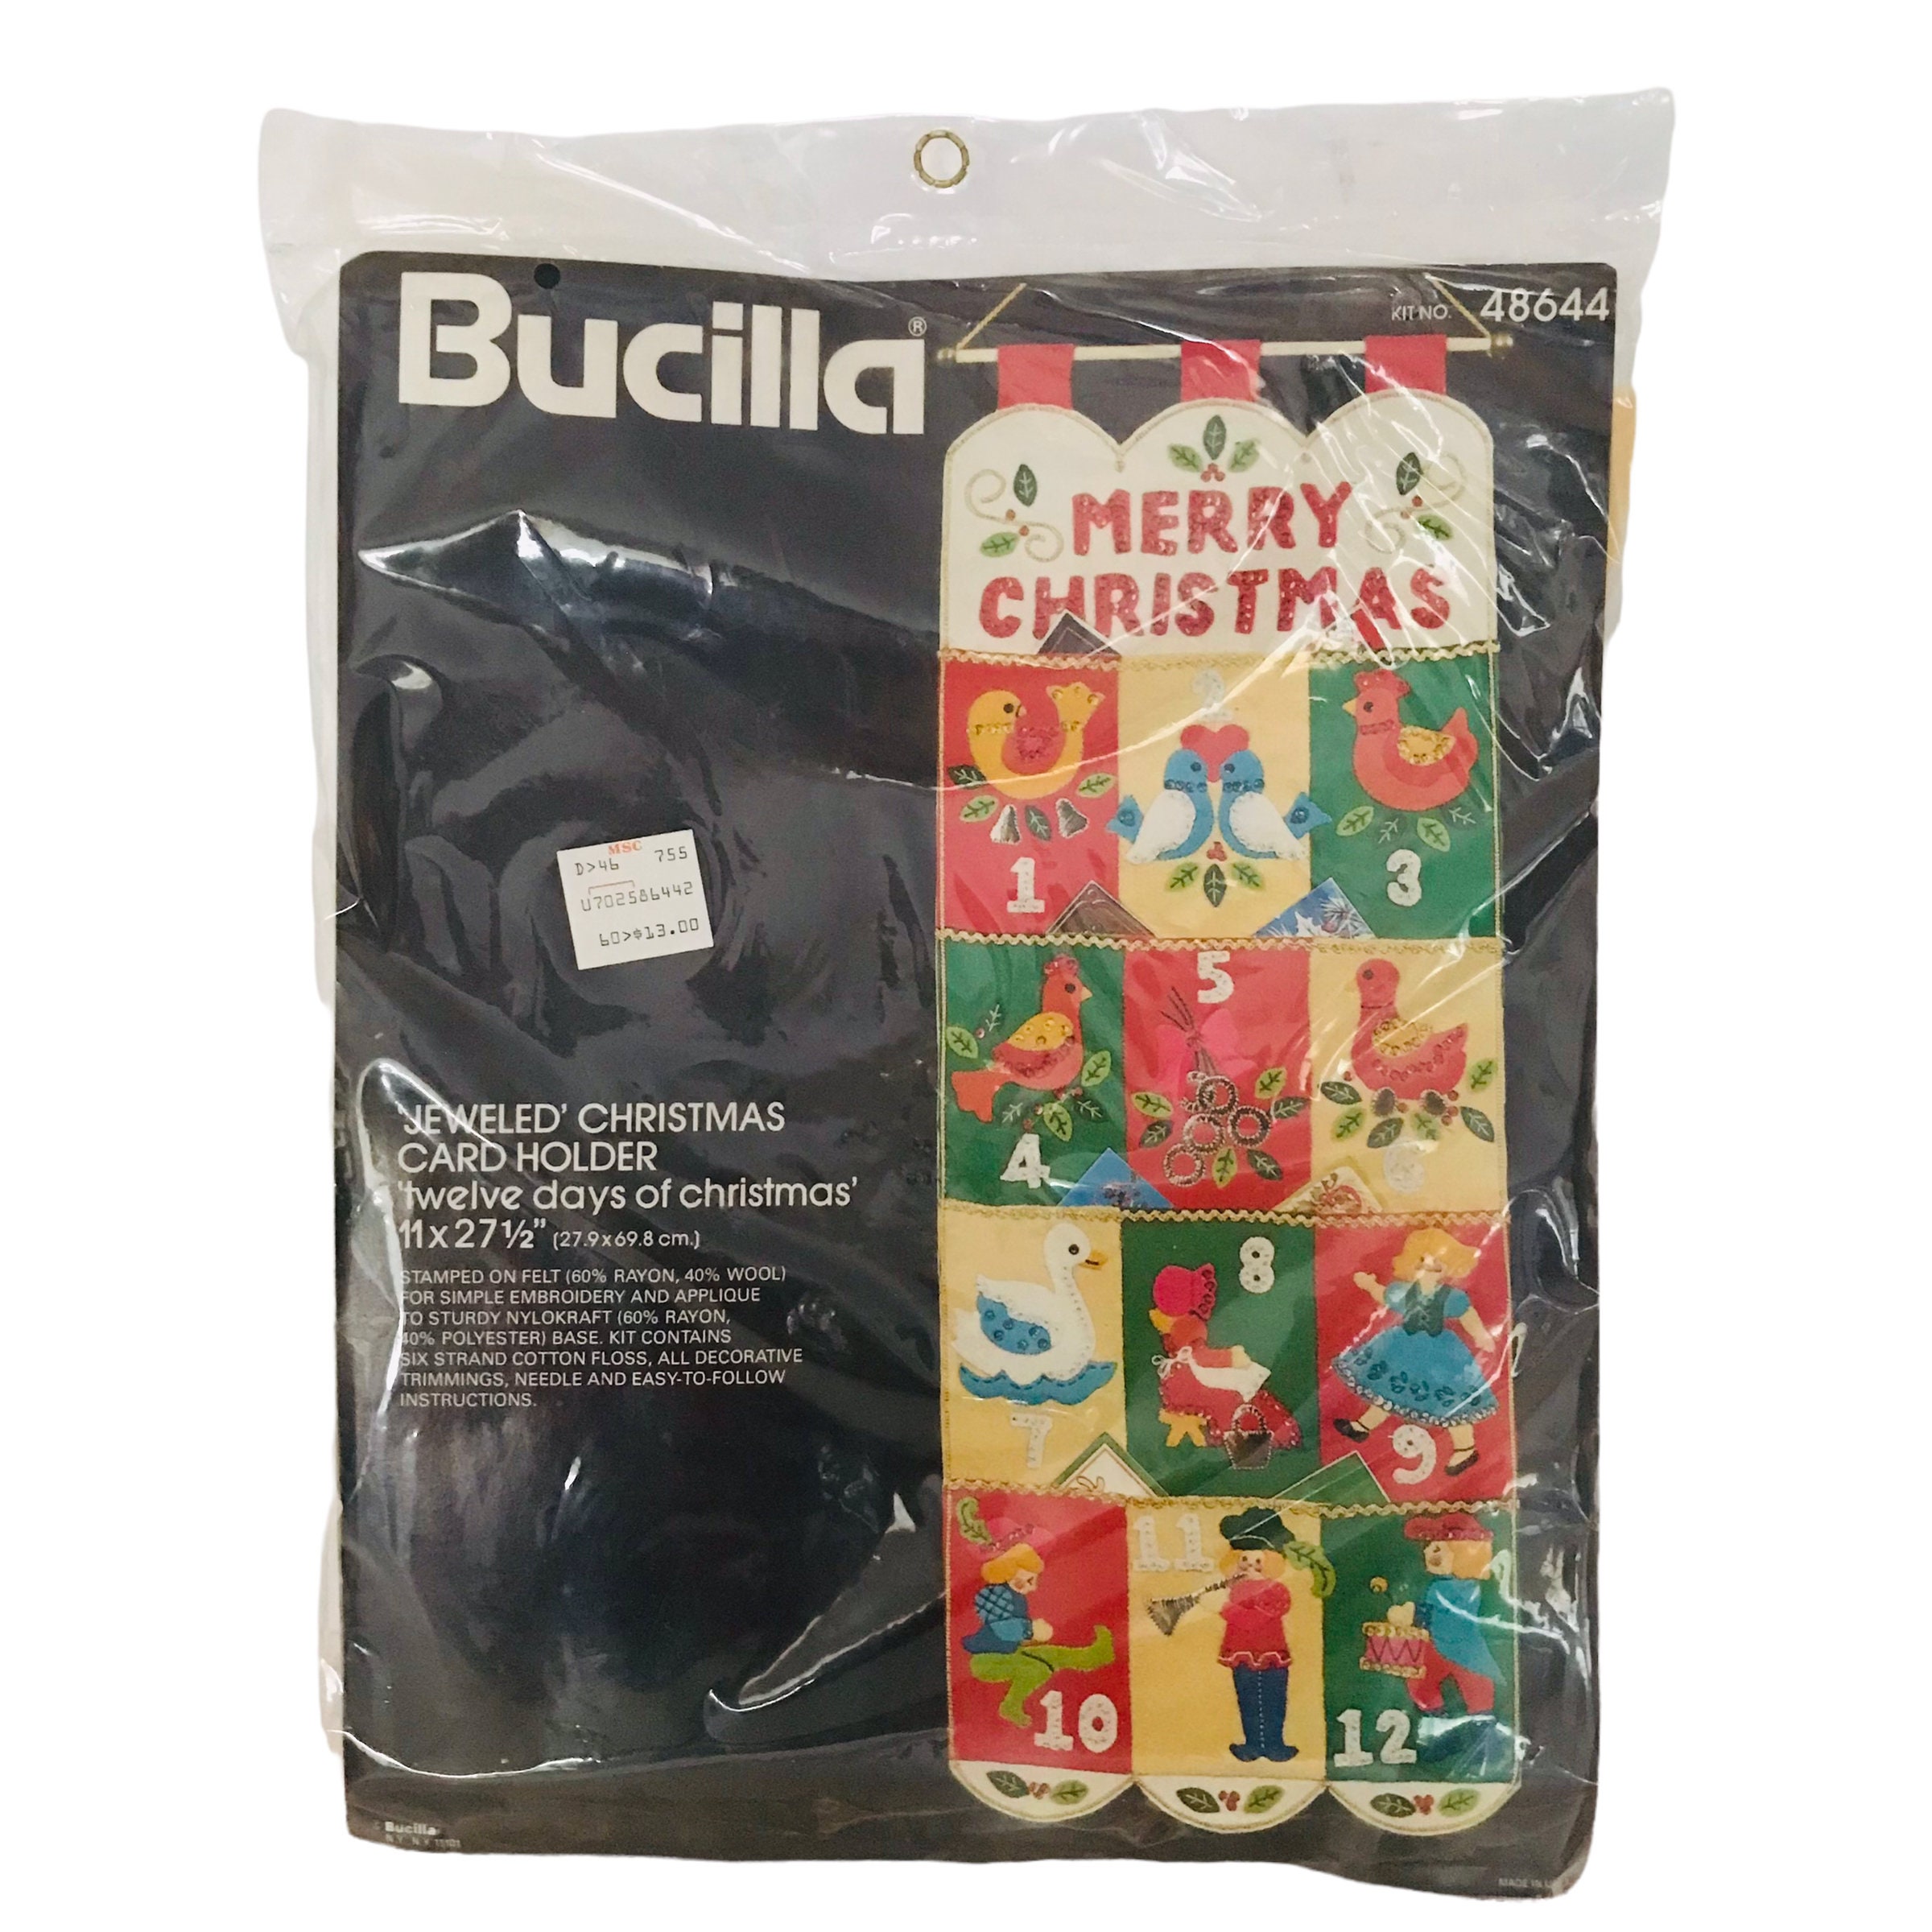 Vintage Bucilla Christmas Stocking Kit Fabric Geese Goose Country Christmas  